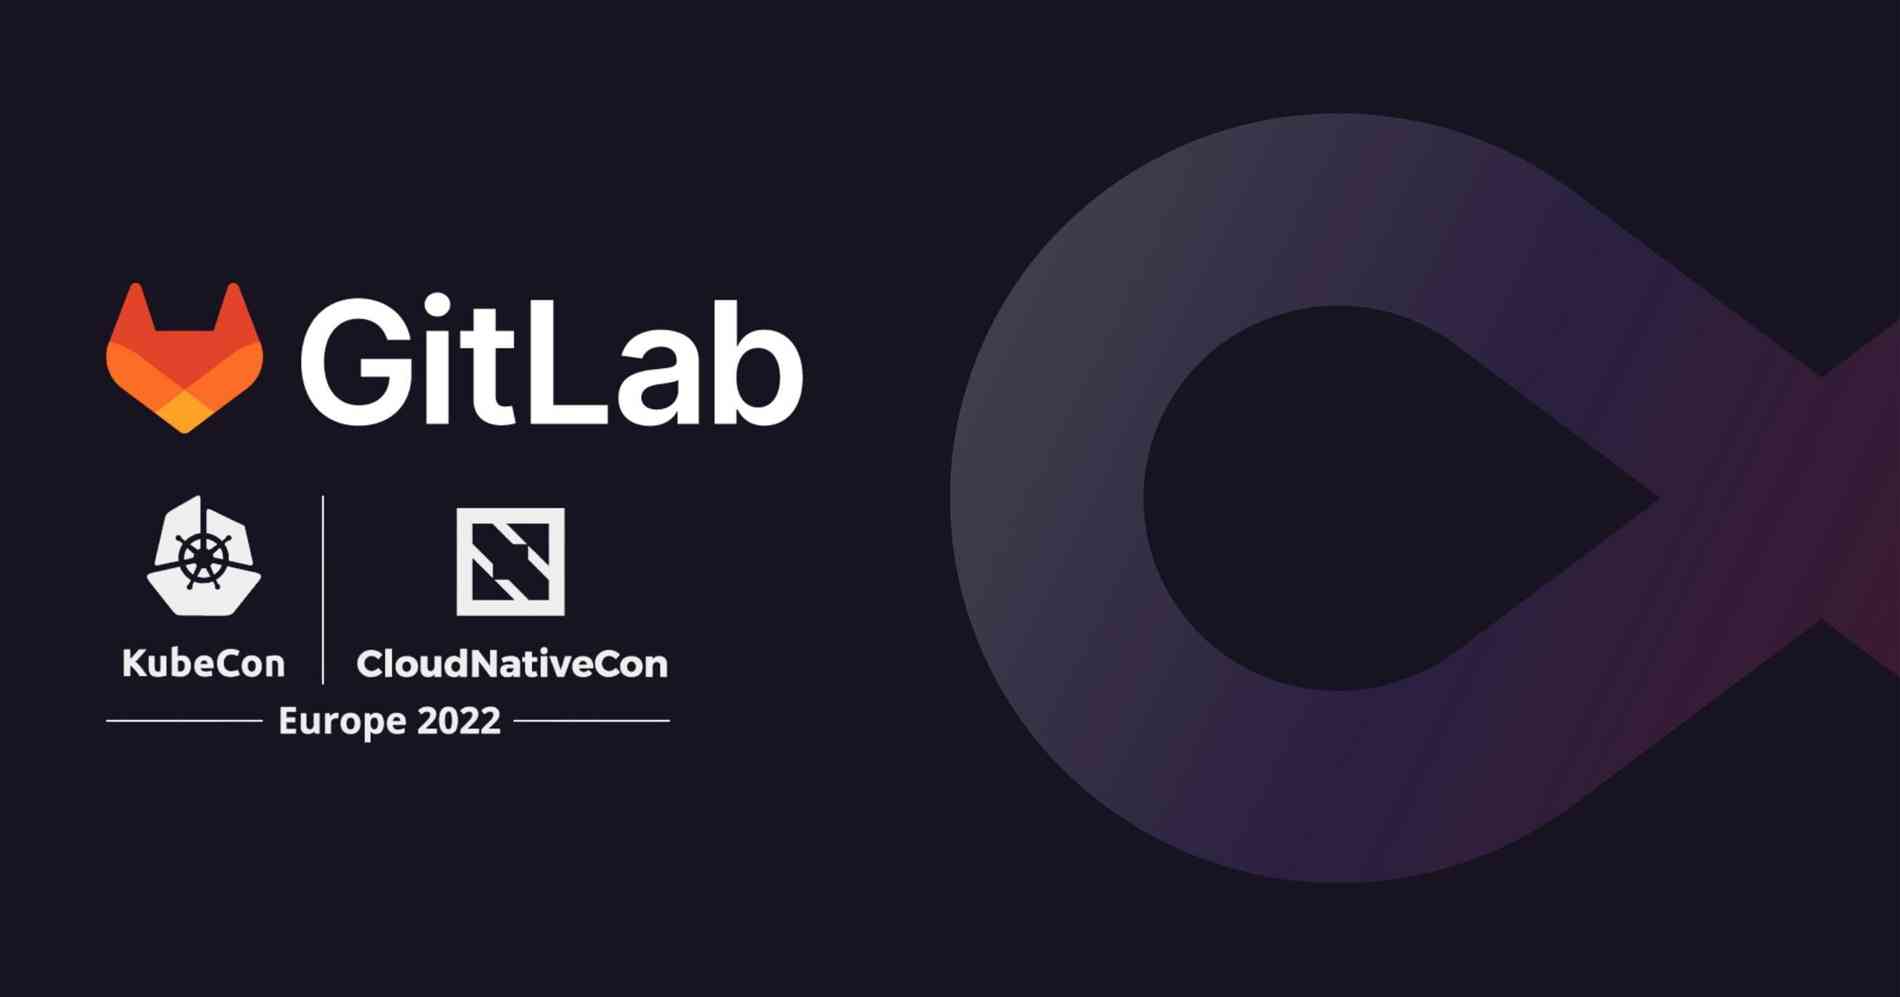 GitLab provides small business with a professional, mature DevOps platform